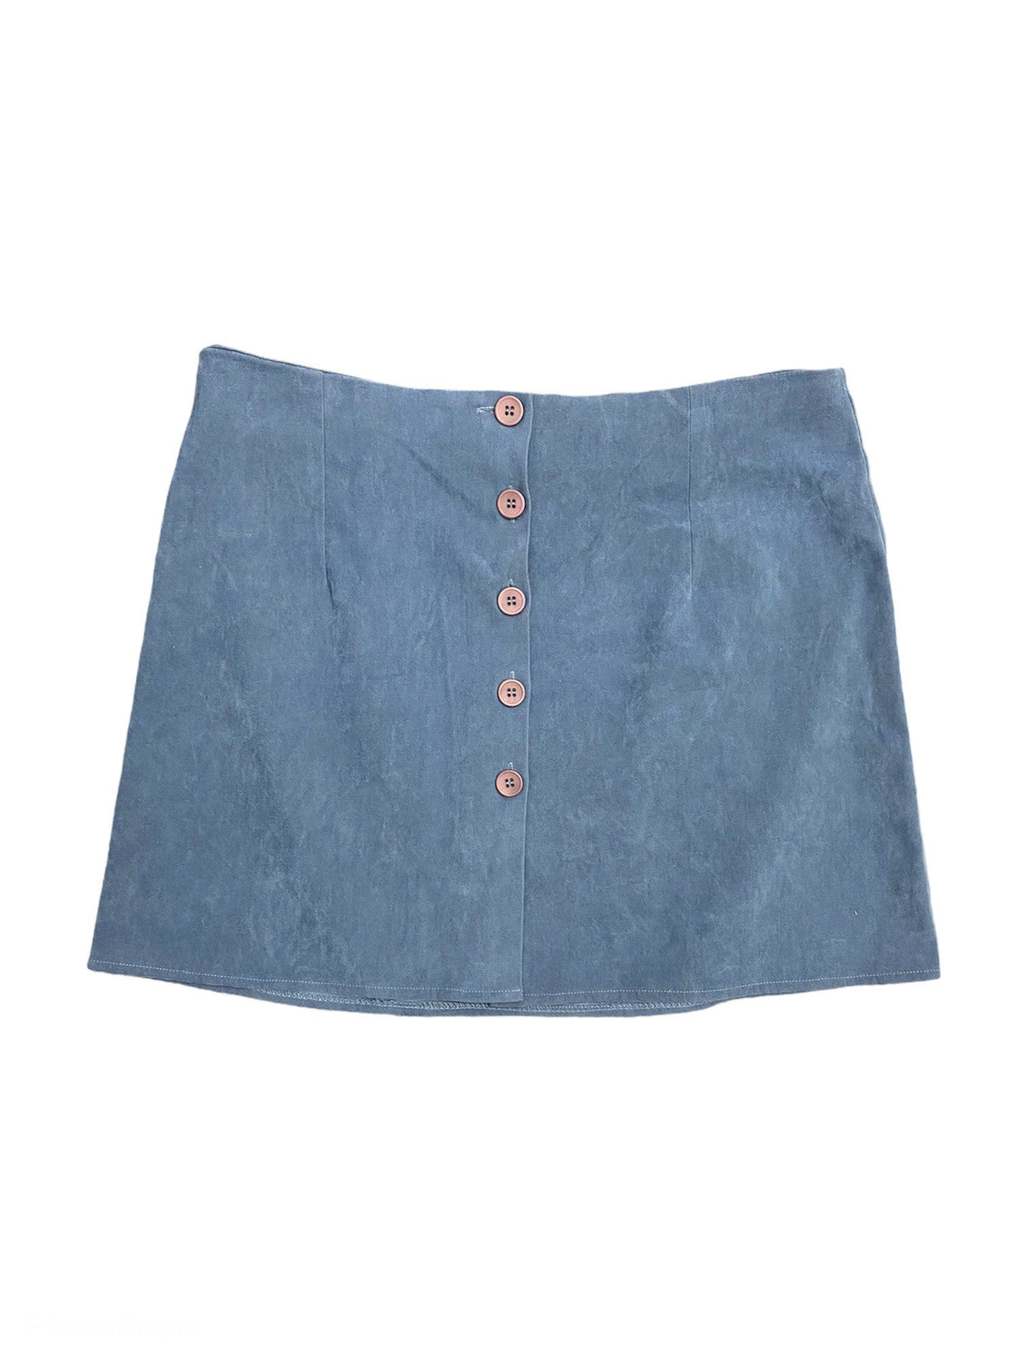 90s Vintage Mini Skirt in Dusky Blue Suedette - M / L - St Cyr Vintage